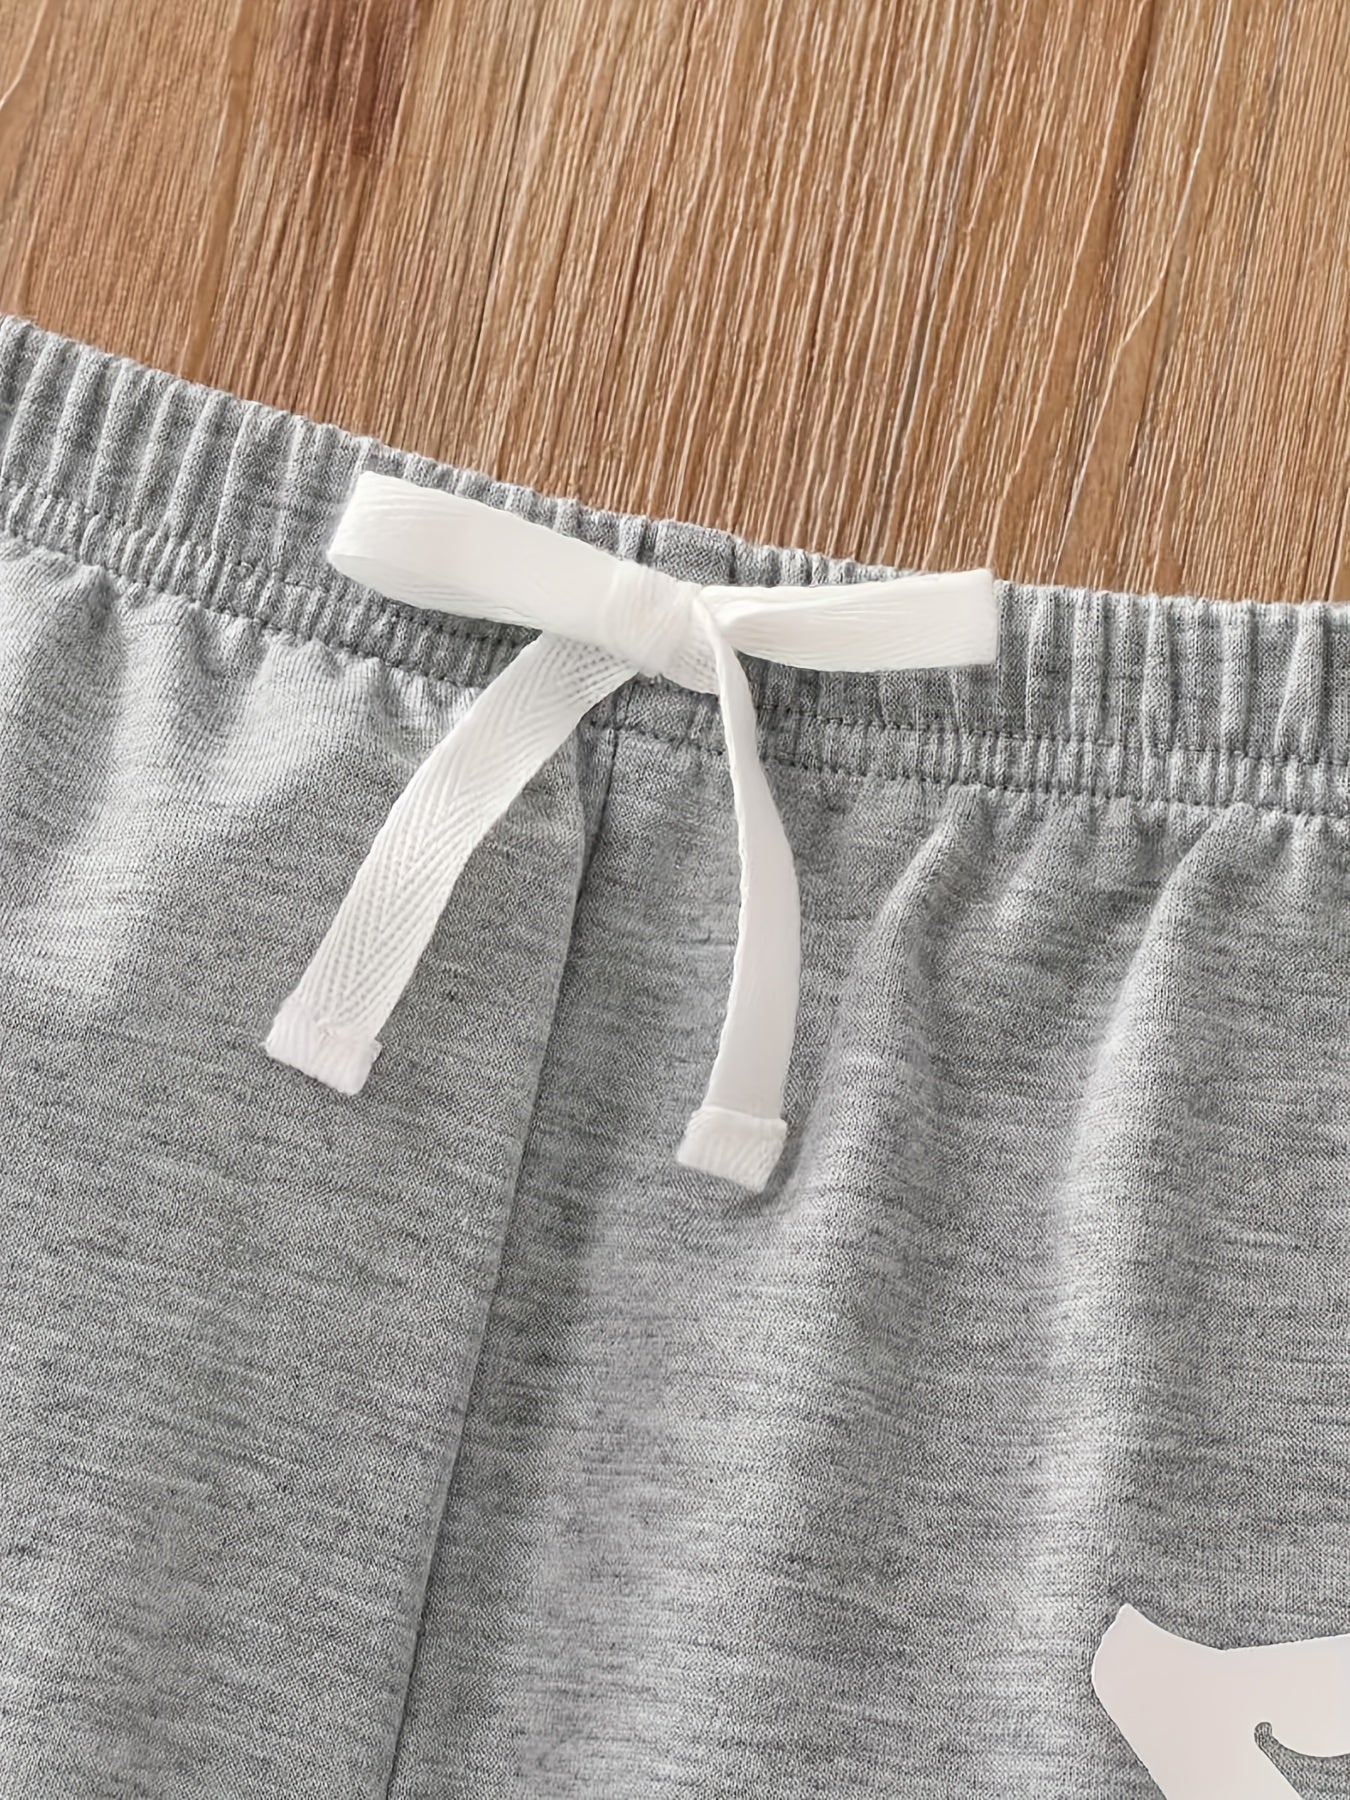 Boys Alphabets Print Sweatpants Elastic Waist Fake Drawstring Sport Jogger Pants Kids Summer Clothes